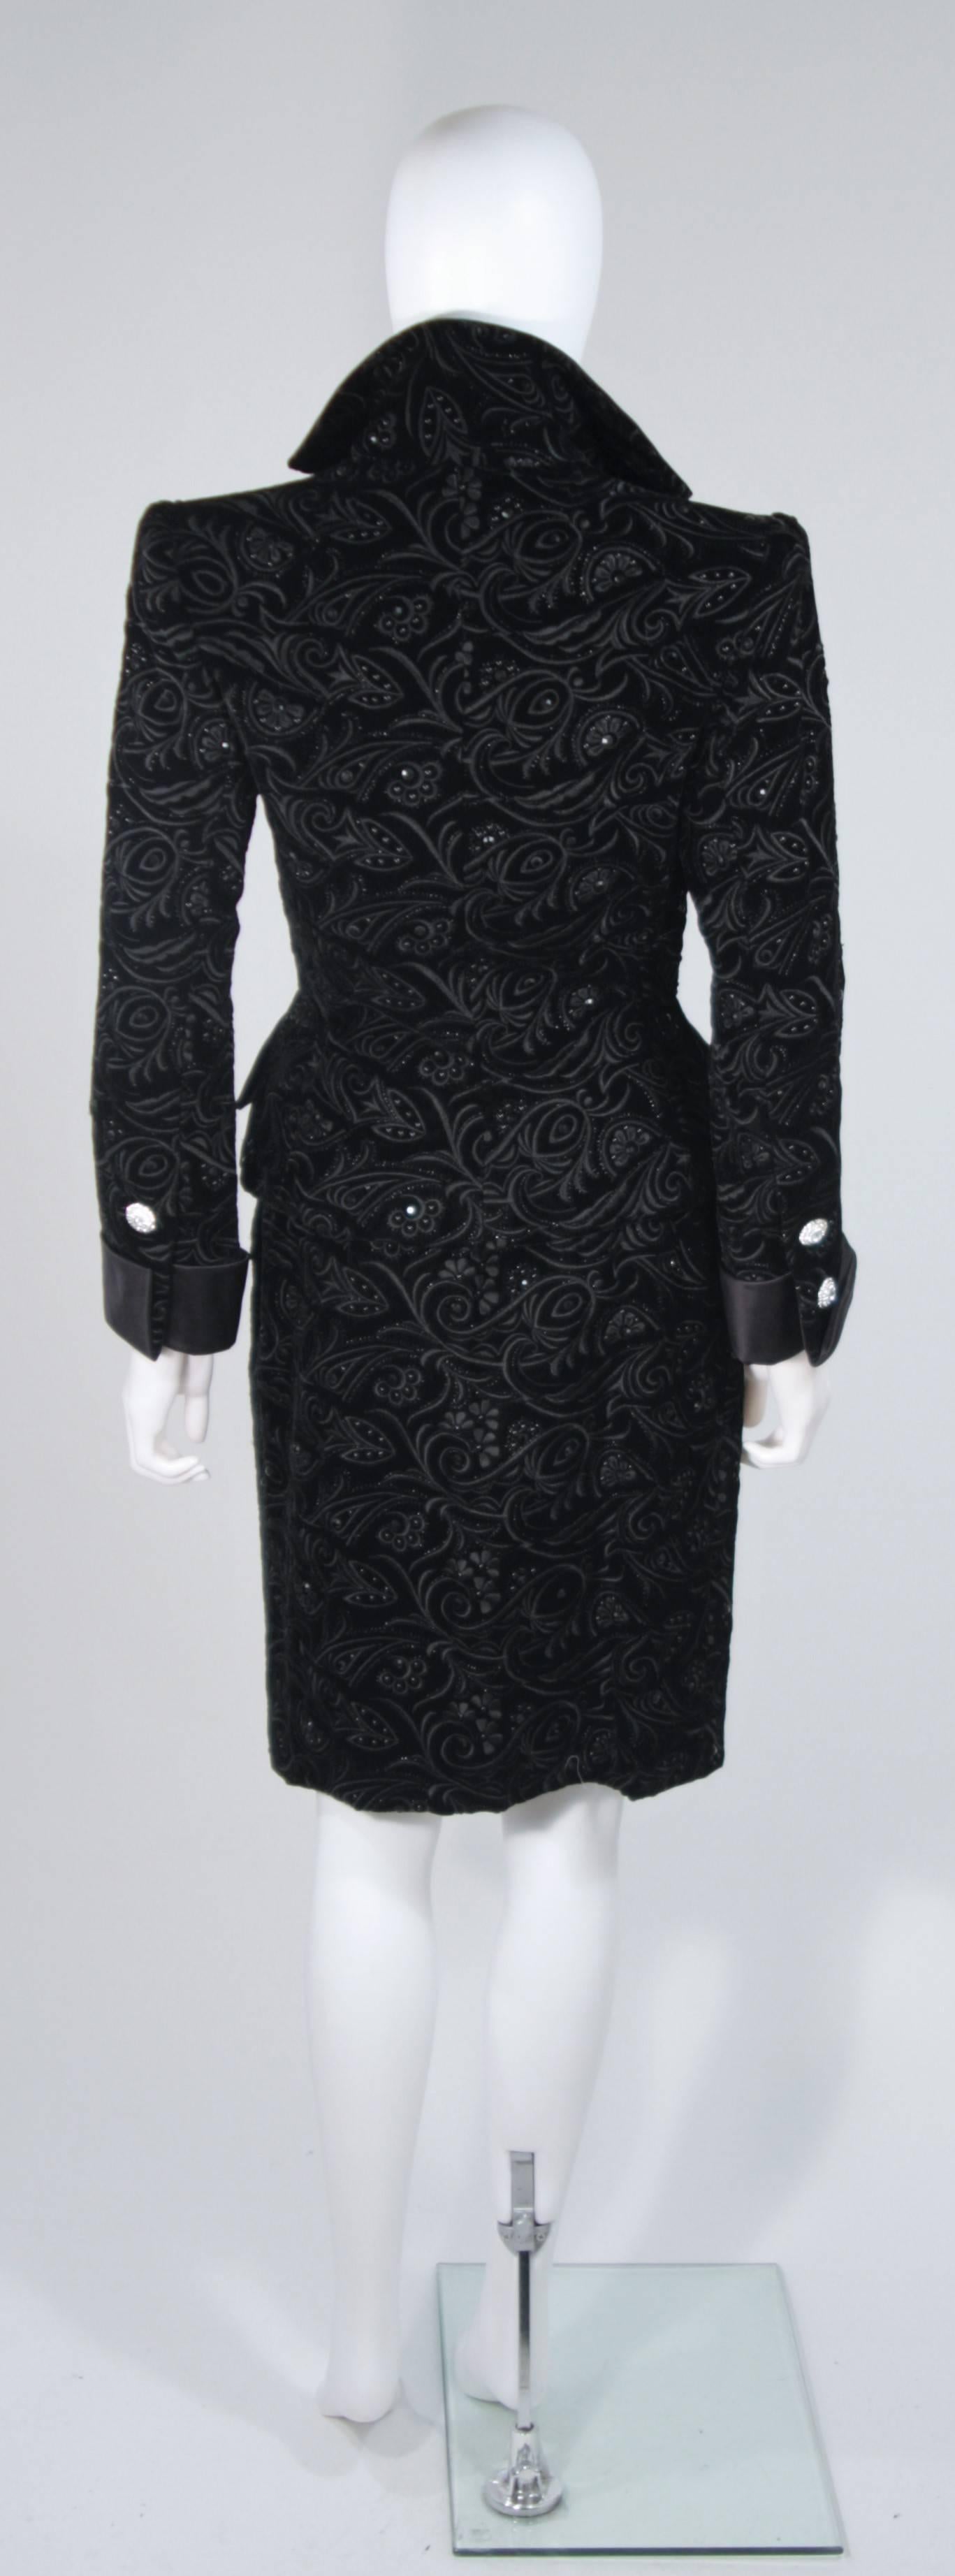 GIVENCHY COUTURE 1980s Black Velvet Floral Embroidered Embellished Suit Size 4-6 2